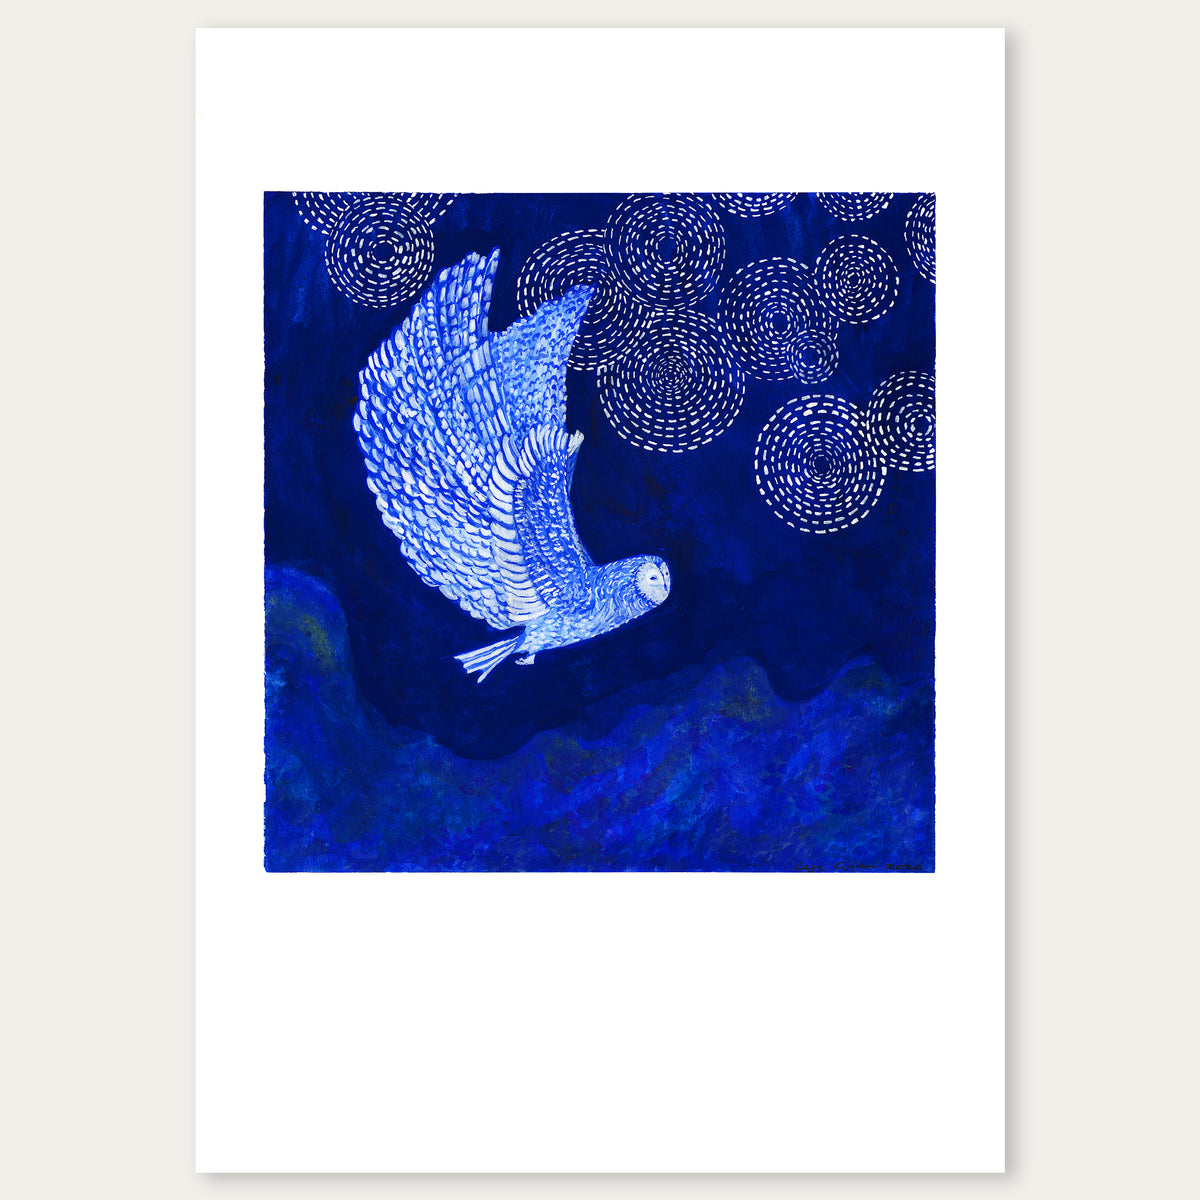 Blue Moon - Owl Takes Flight In The Moonlight.